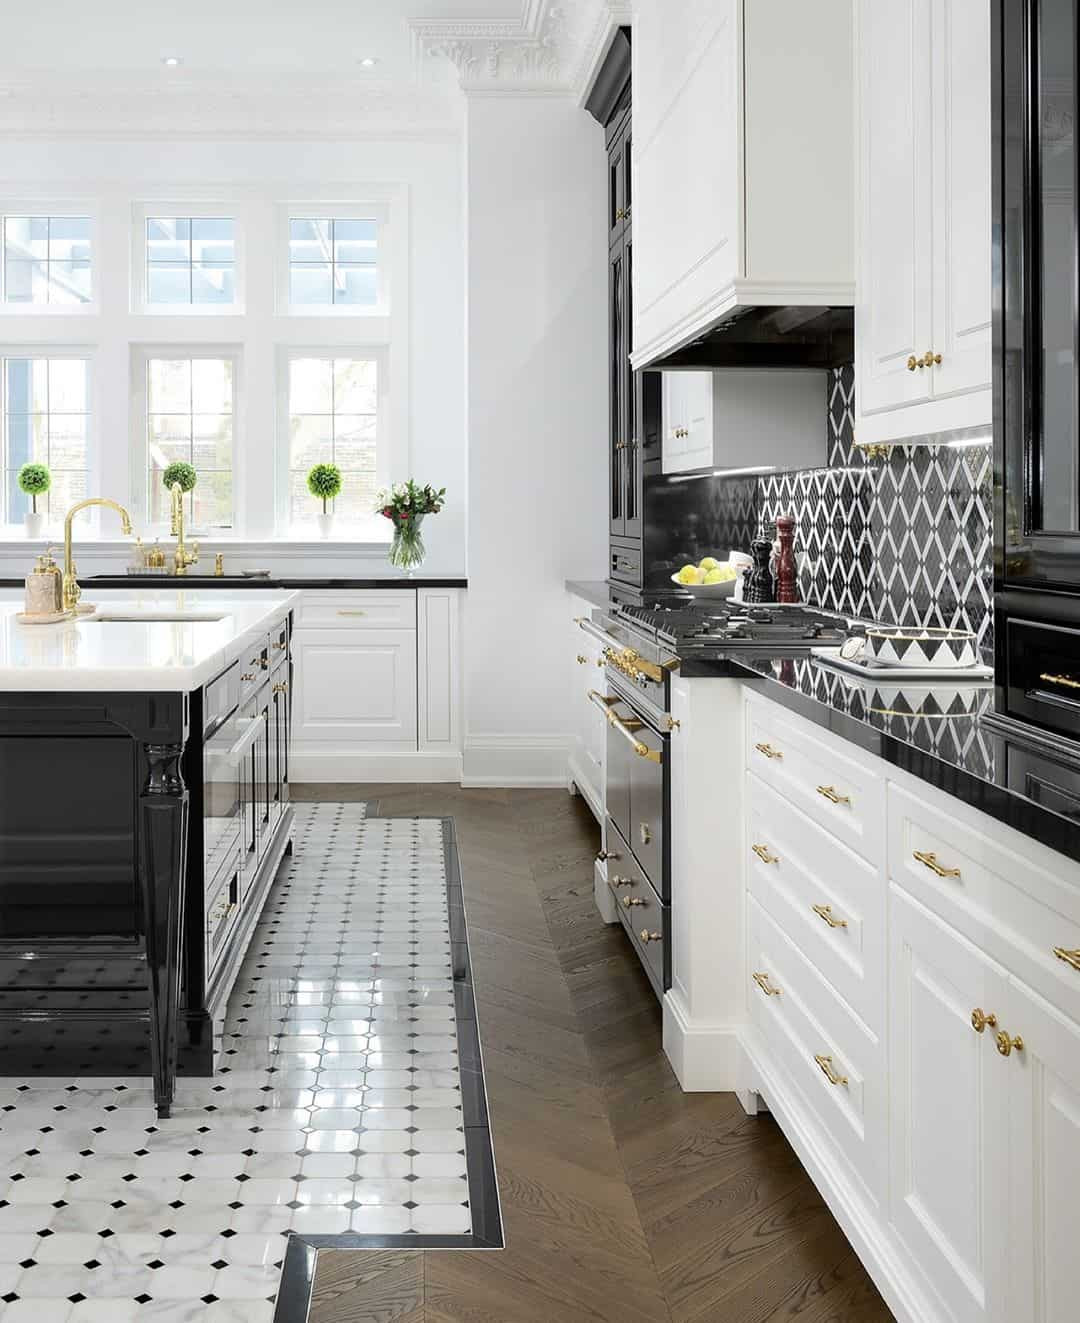 Kitchen Remodels 2020
 Home interiors 2020 DIY Decor Ideas Dor Your Home Design